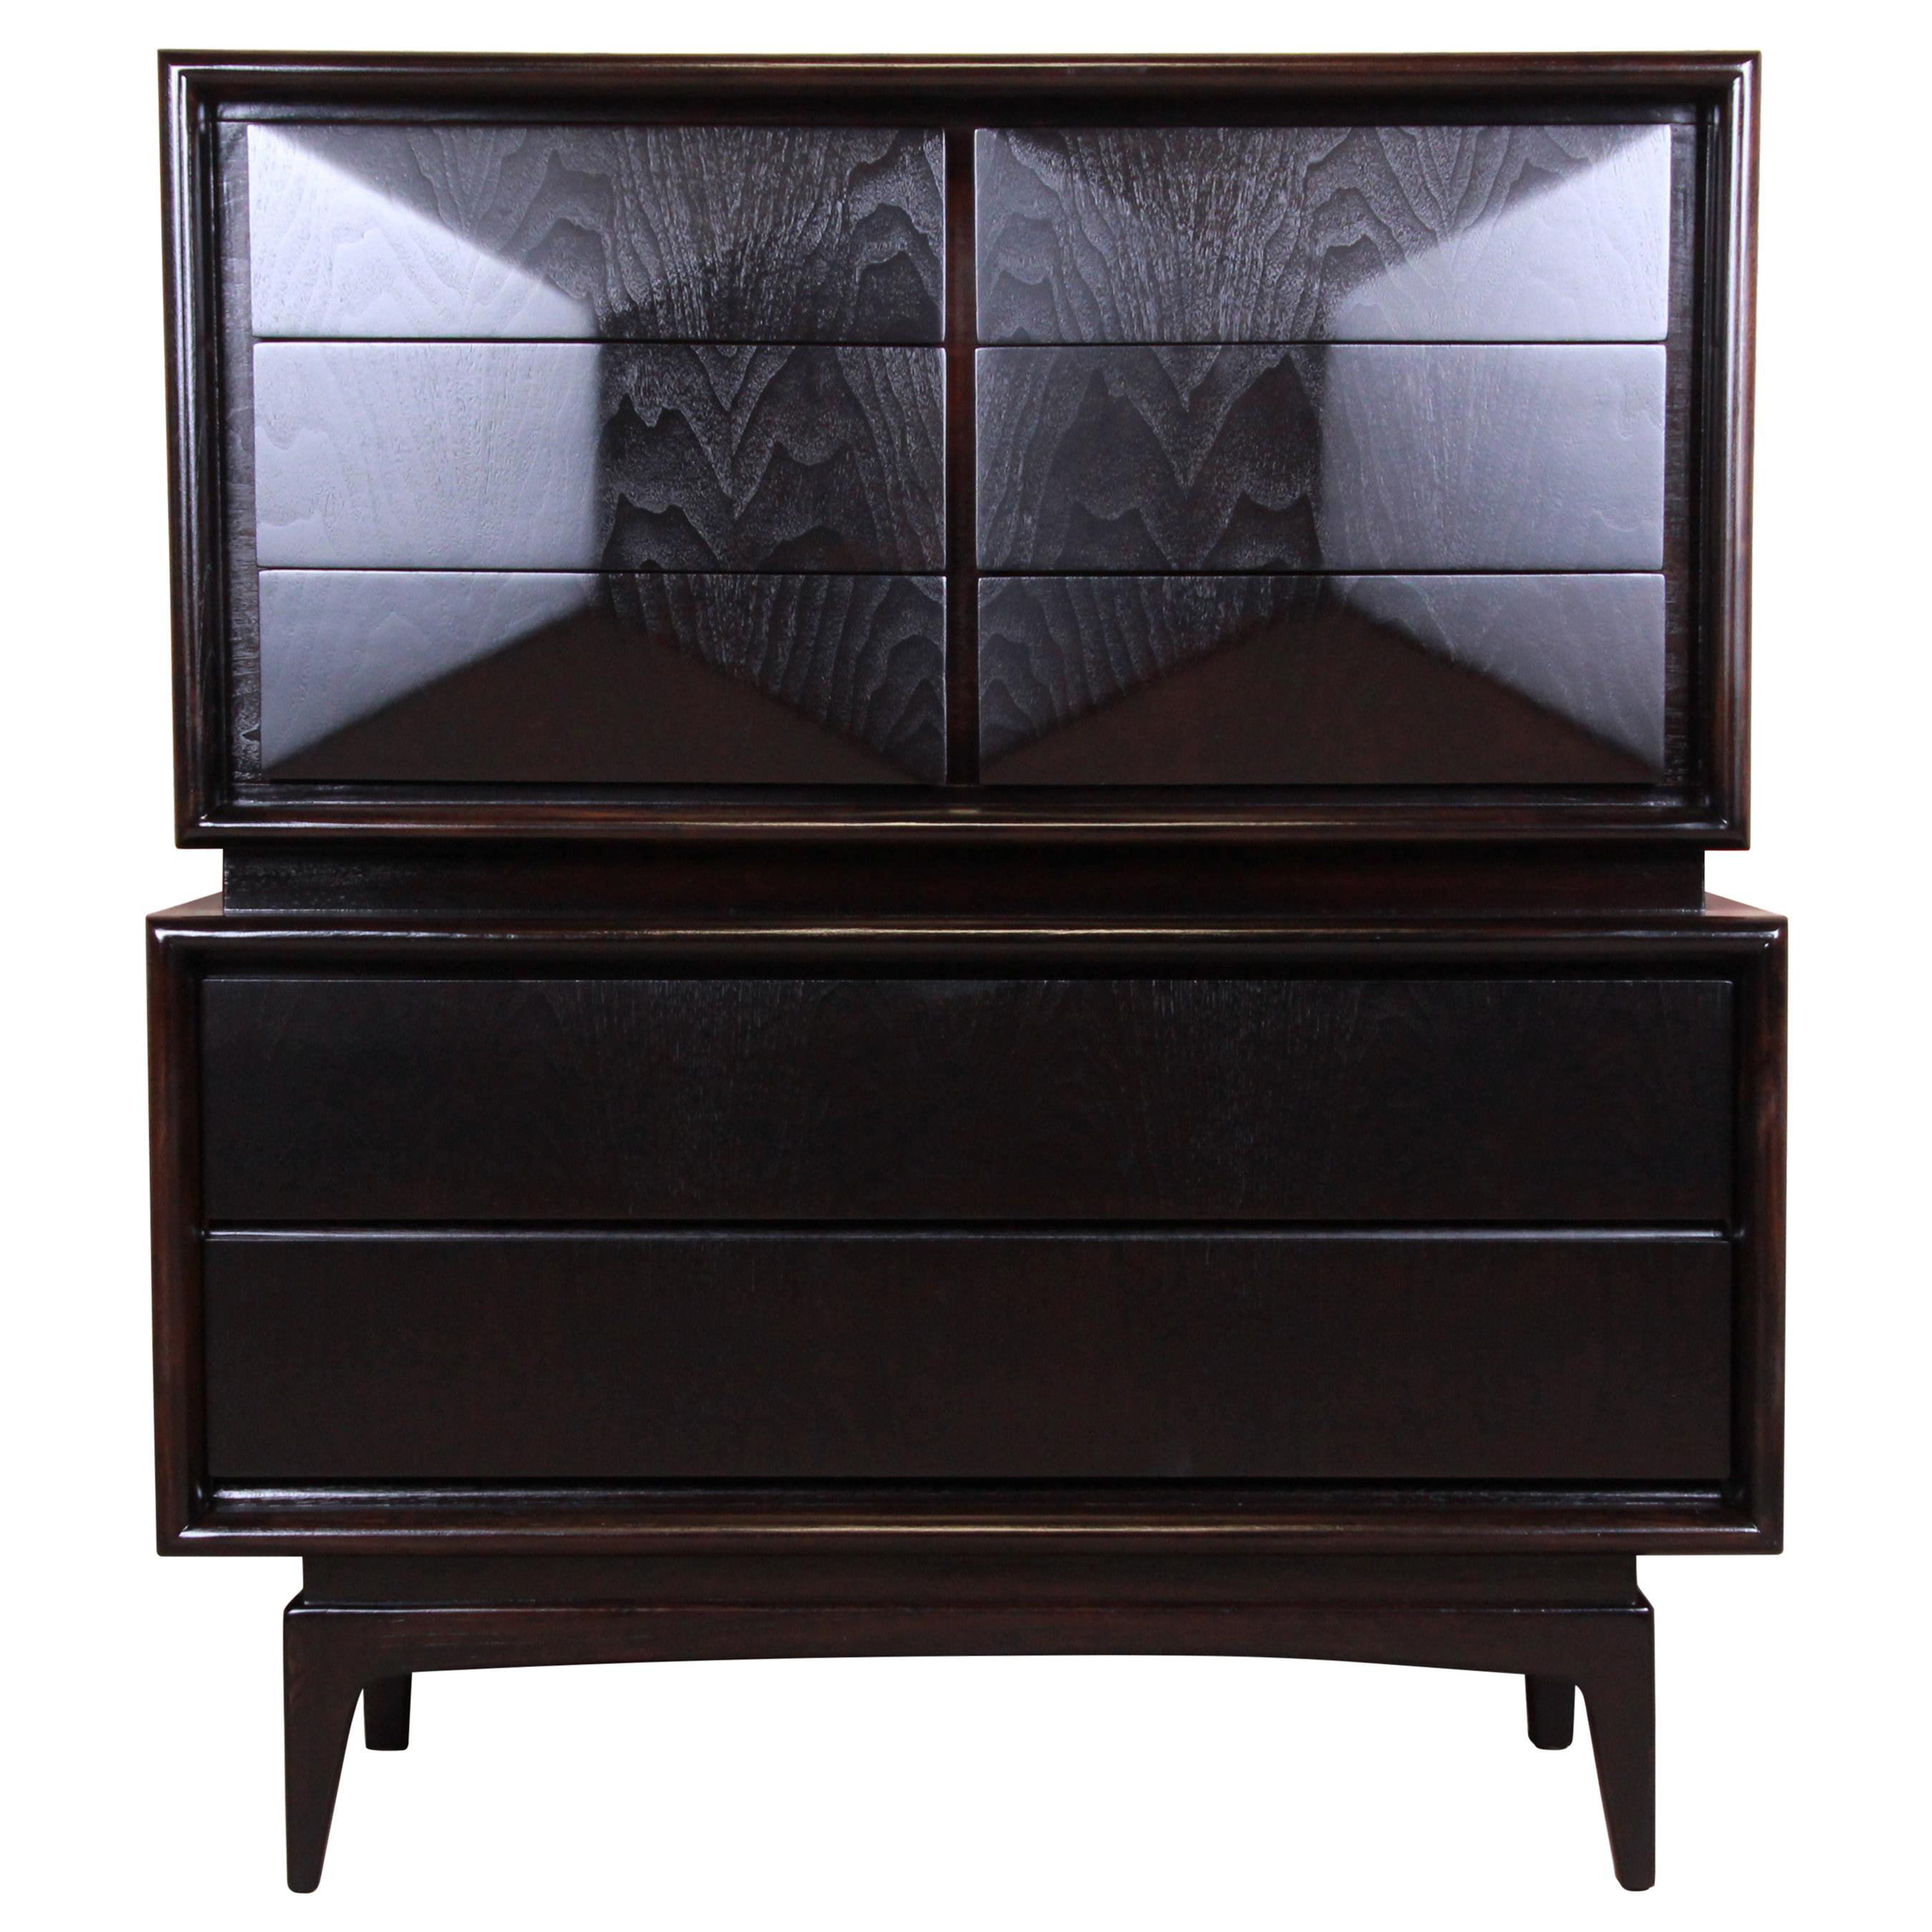 Mid-Century Modern Ebonized Diamond Front Highboy Dresser by United, Refinished